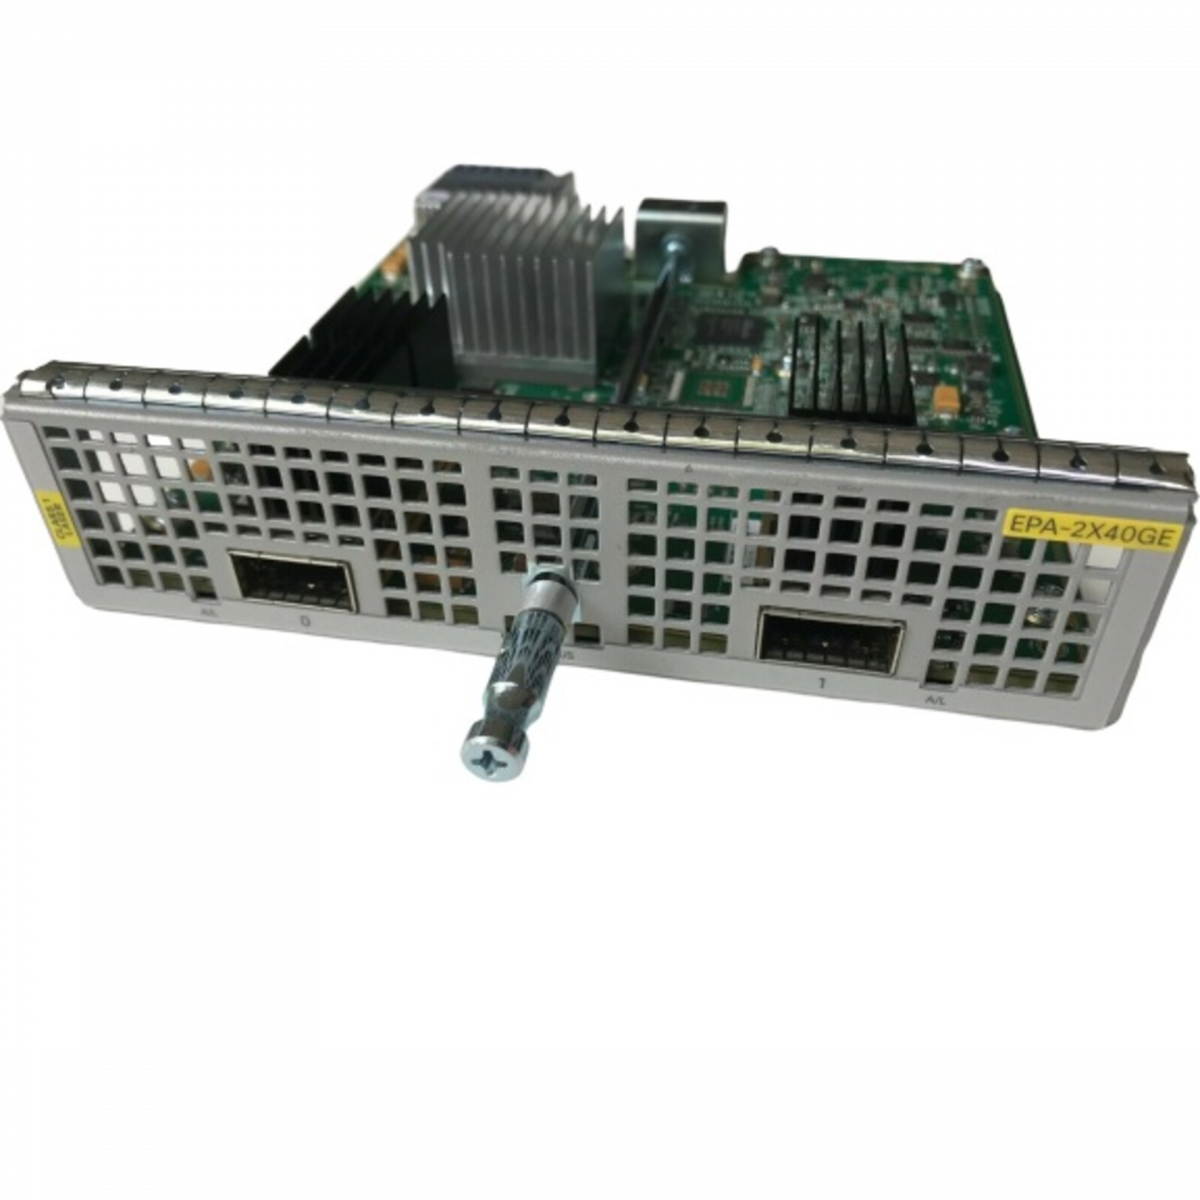 Модуль Cisco EPA-2X40GE